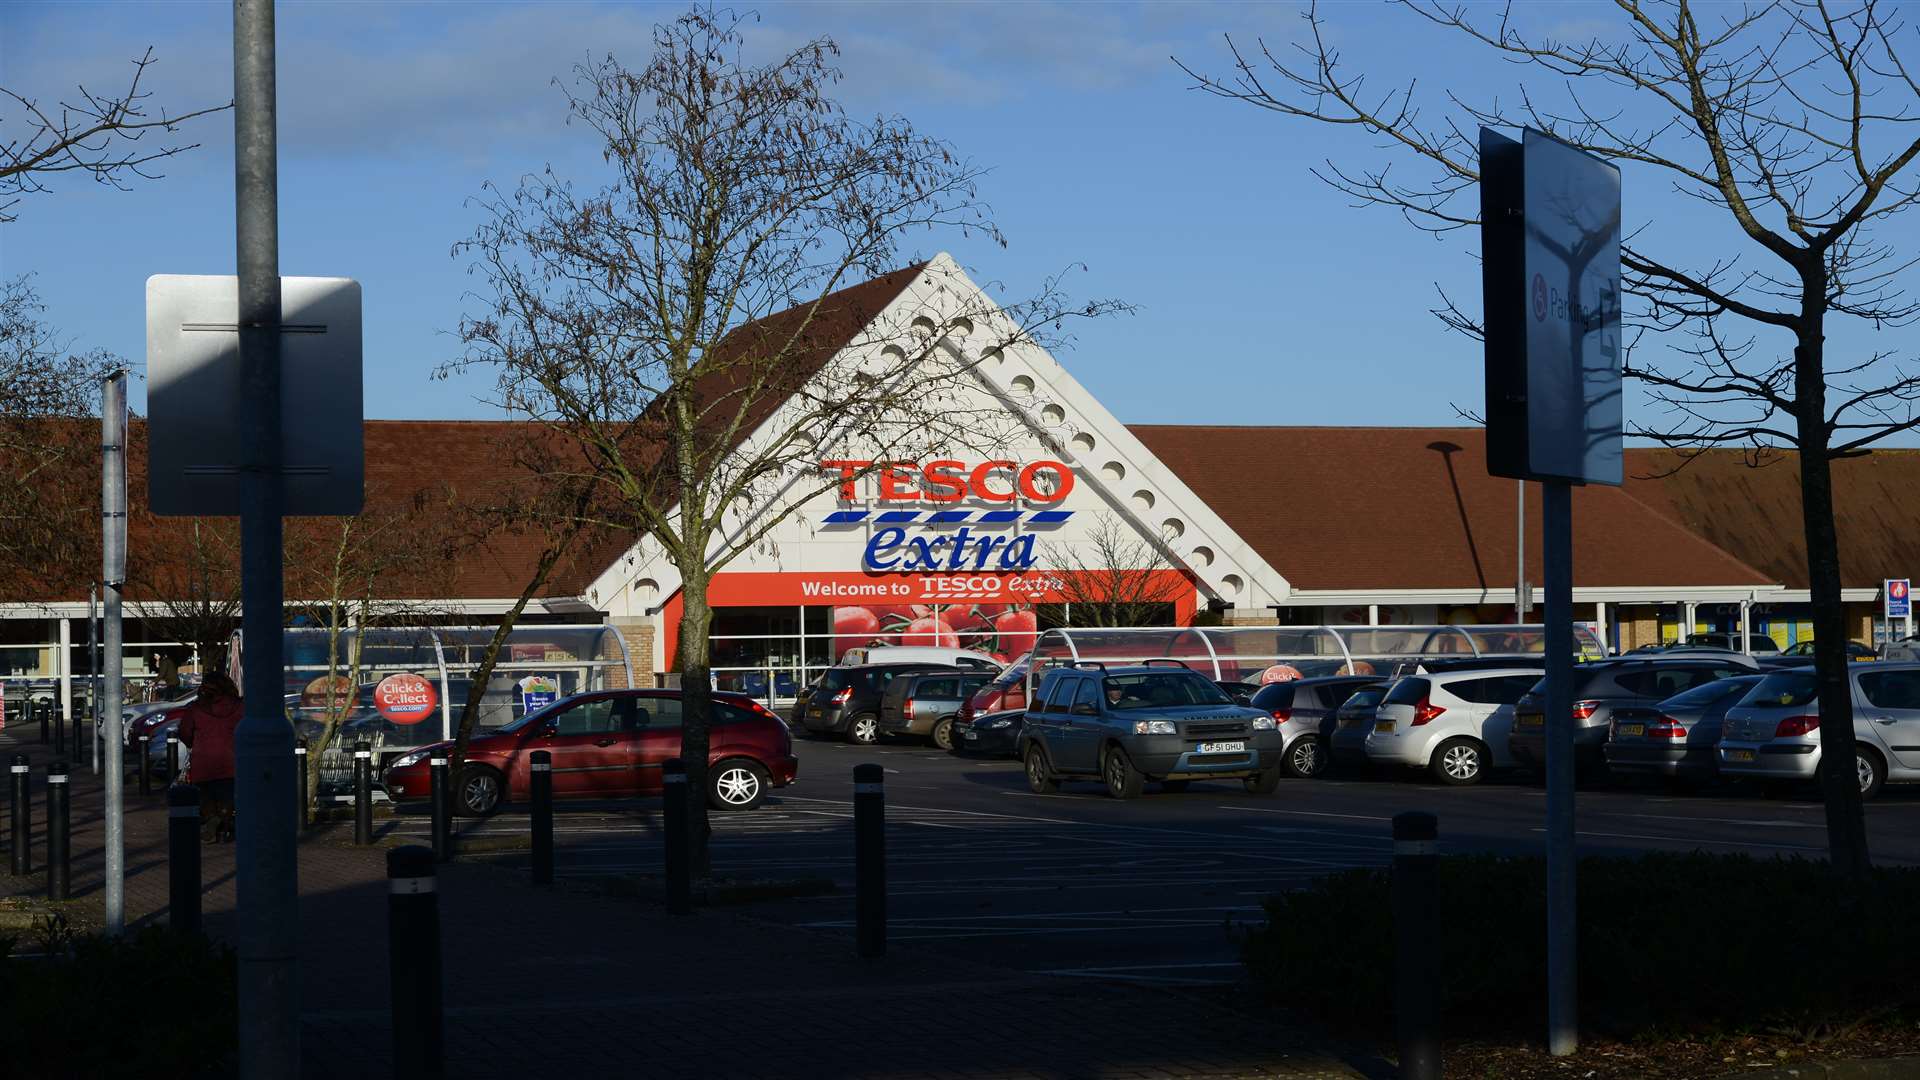 The Tesco Extra store in Moatfield Meadow, Park Farm, Ashford.